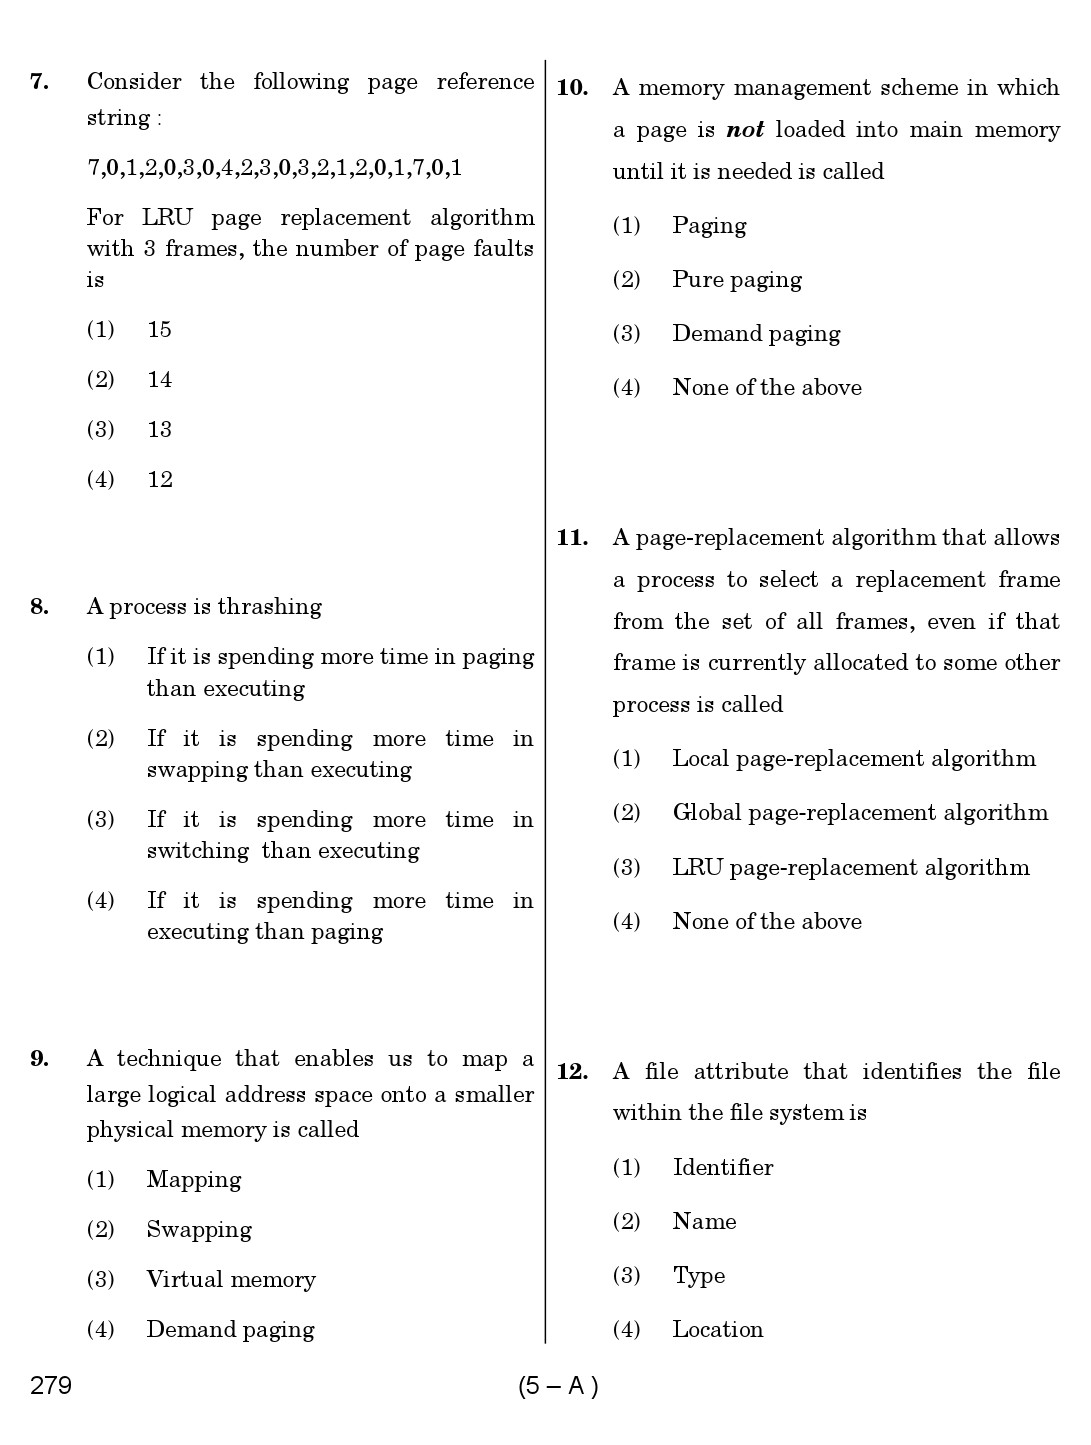 Karnataka PSC Computer Science Teachers Exam Sample Question Paper Subject code 279 5